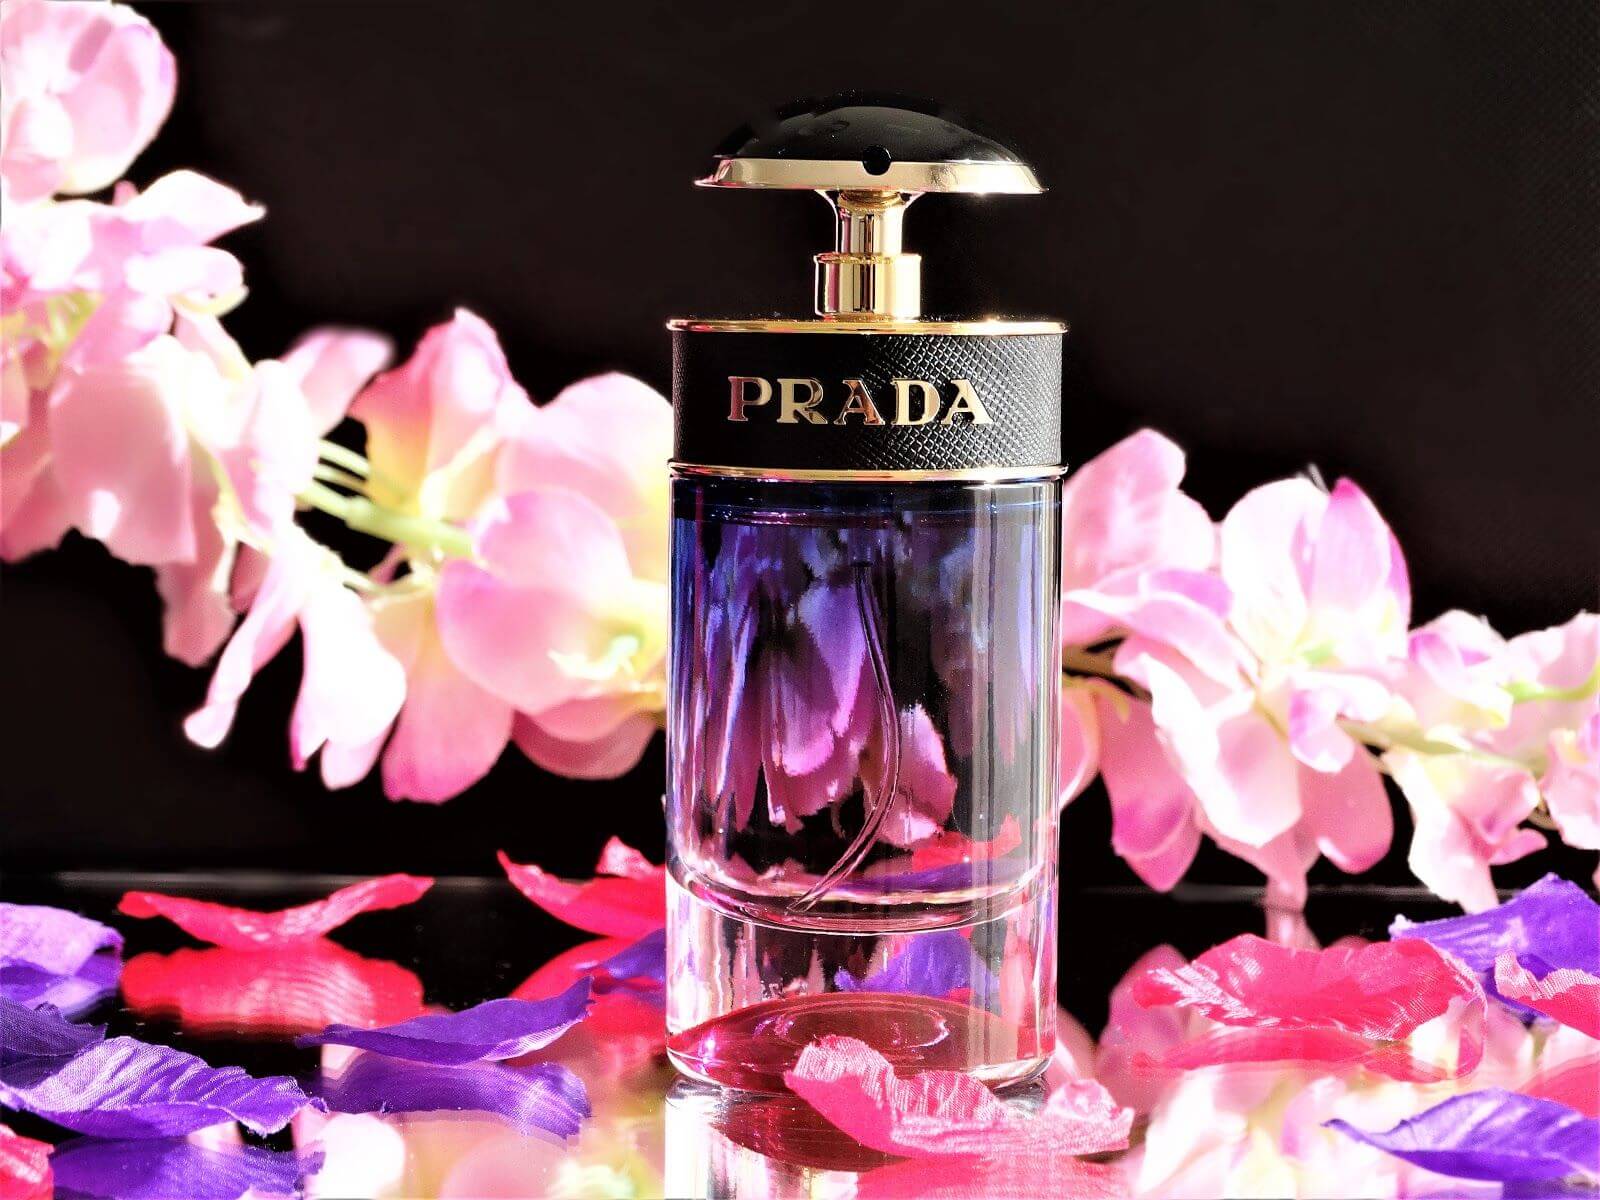 Prada Candy Night Eau De Parfum 7 ml เพิ่มเสน่ห์ความหอมให้น่าหลงใหล ด้วยน้ำหอมคุณภาพดีจากแบรนด์ PRADA ด้วยคัดสรรส่วนผสมคุณภาพสูง ผสานกลิ่นหอมละมุนชวนลุ่มหลงจากธรรมชาติ ให้กลิ่นหอมติดทนยาวนานตลอดทั้งวัน พร้อมเติมเต็มวันพิเศษของคุณให้น่าประทับใจ